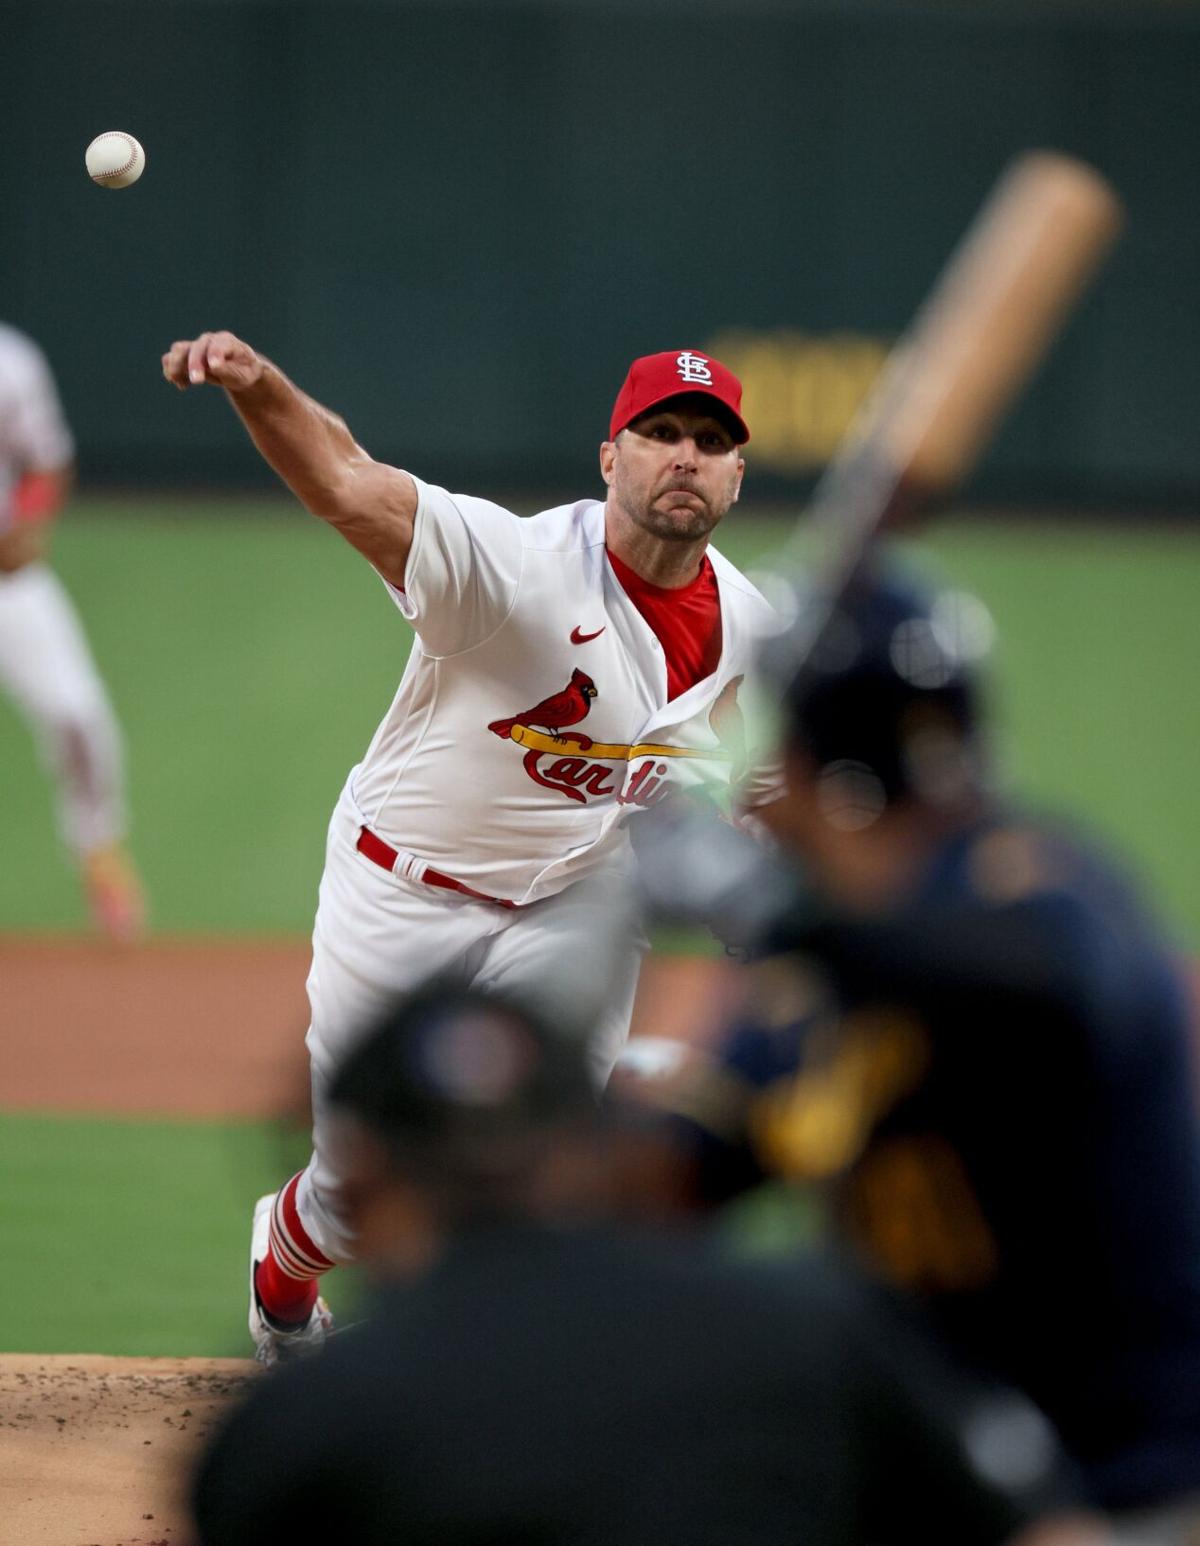 Pitcher John Smoltz of the St. Louis Cardinals delivers a pitch